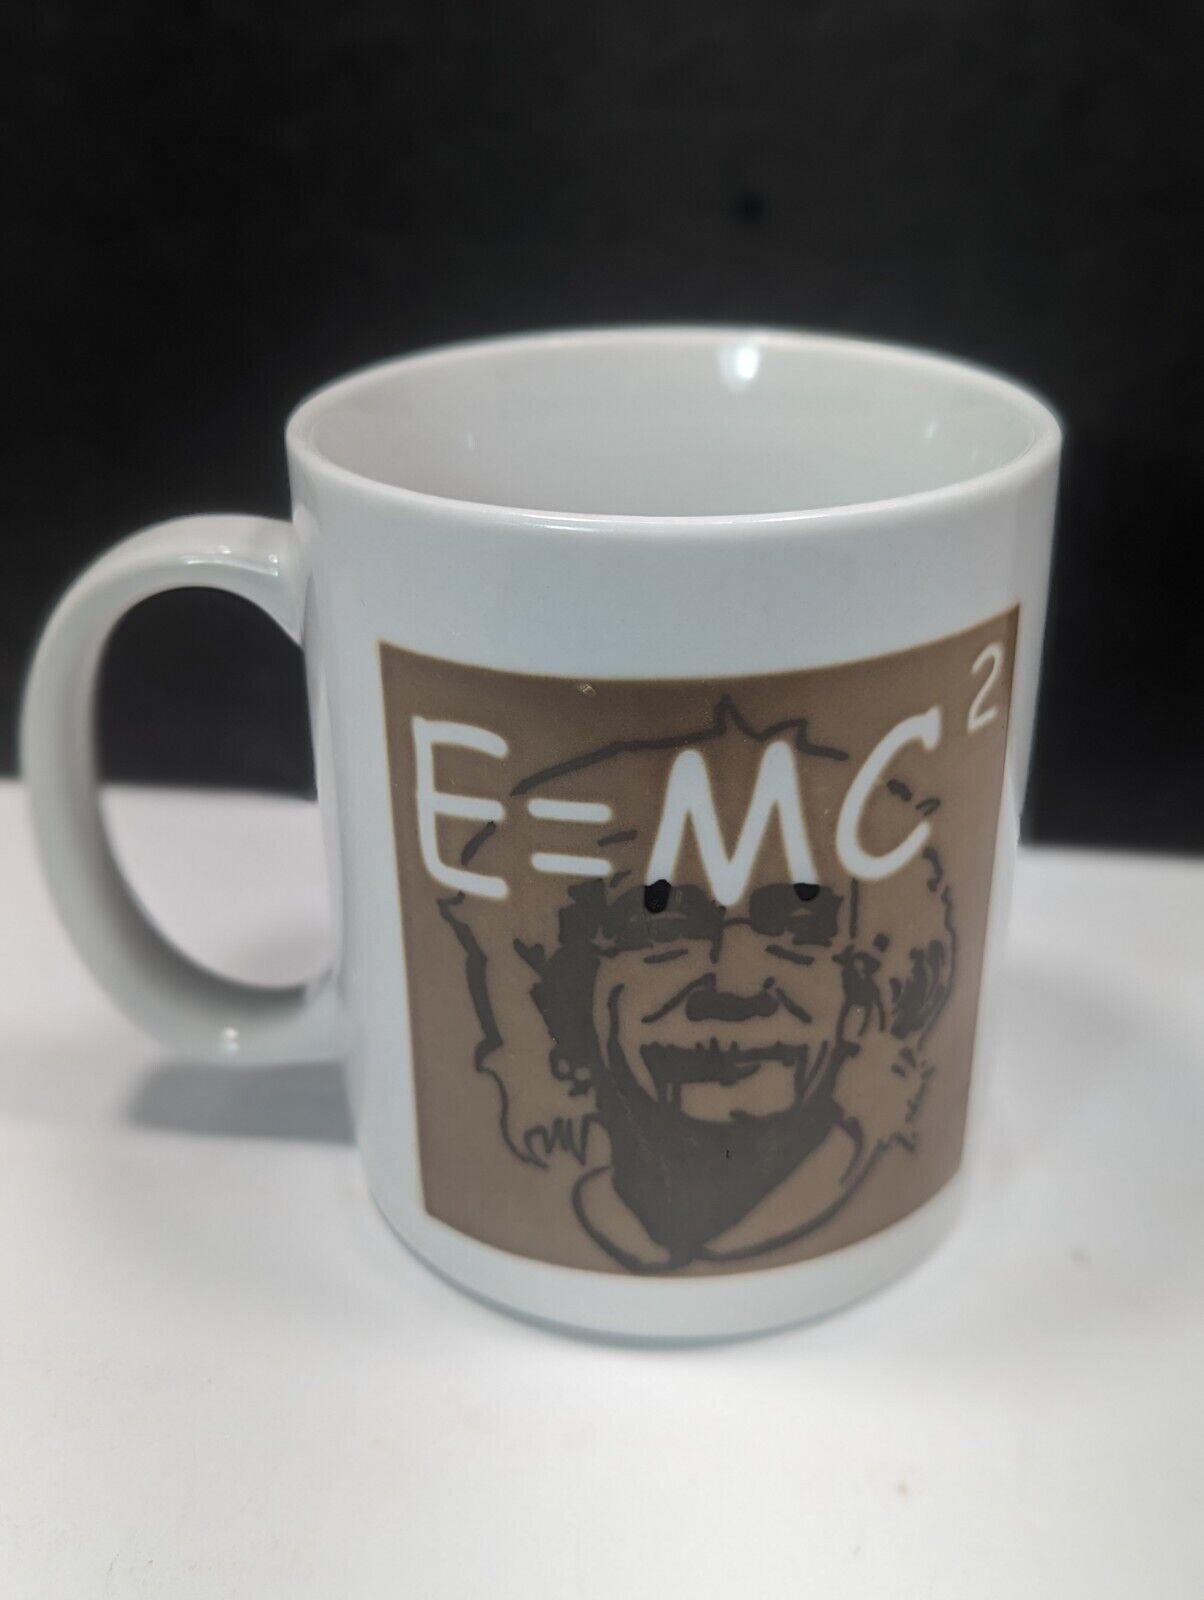 EINSTEIN E = MC2 WONDERMUGS CERAMIC COFFEE CUP MUG THEORY OF RELATIVITY